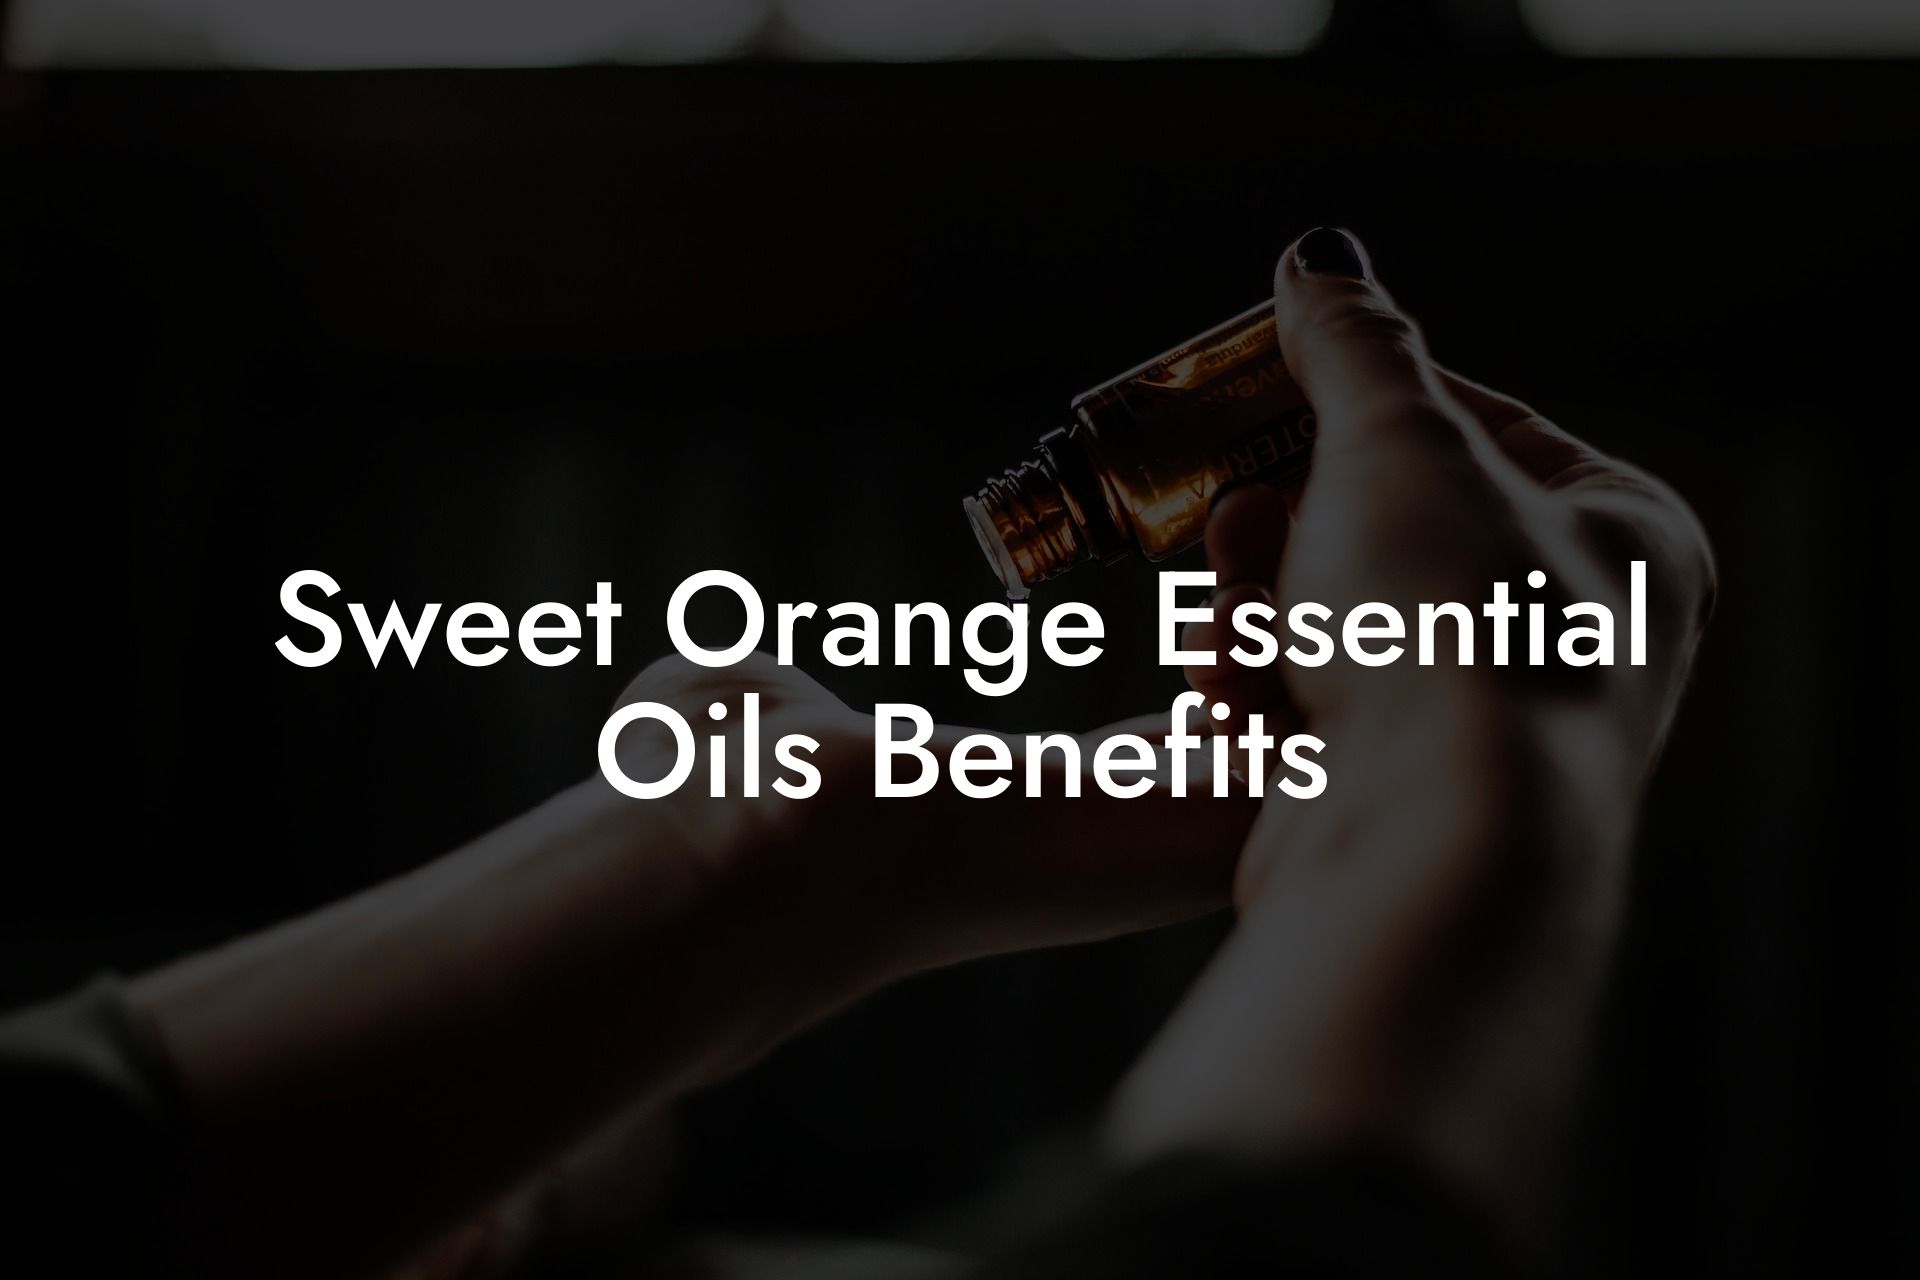 Sweet Orange Essential Oils Benefits